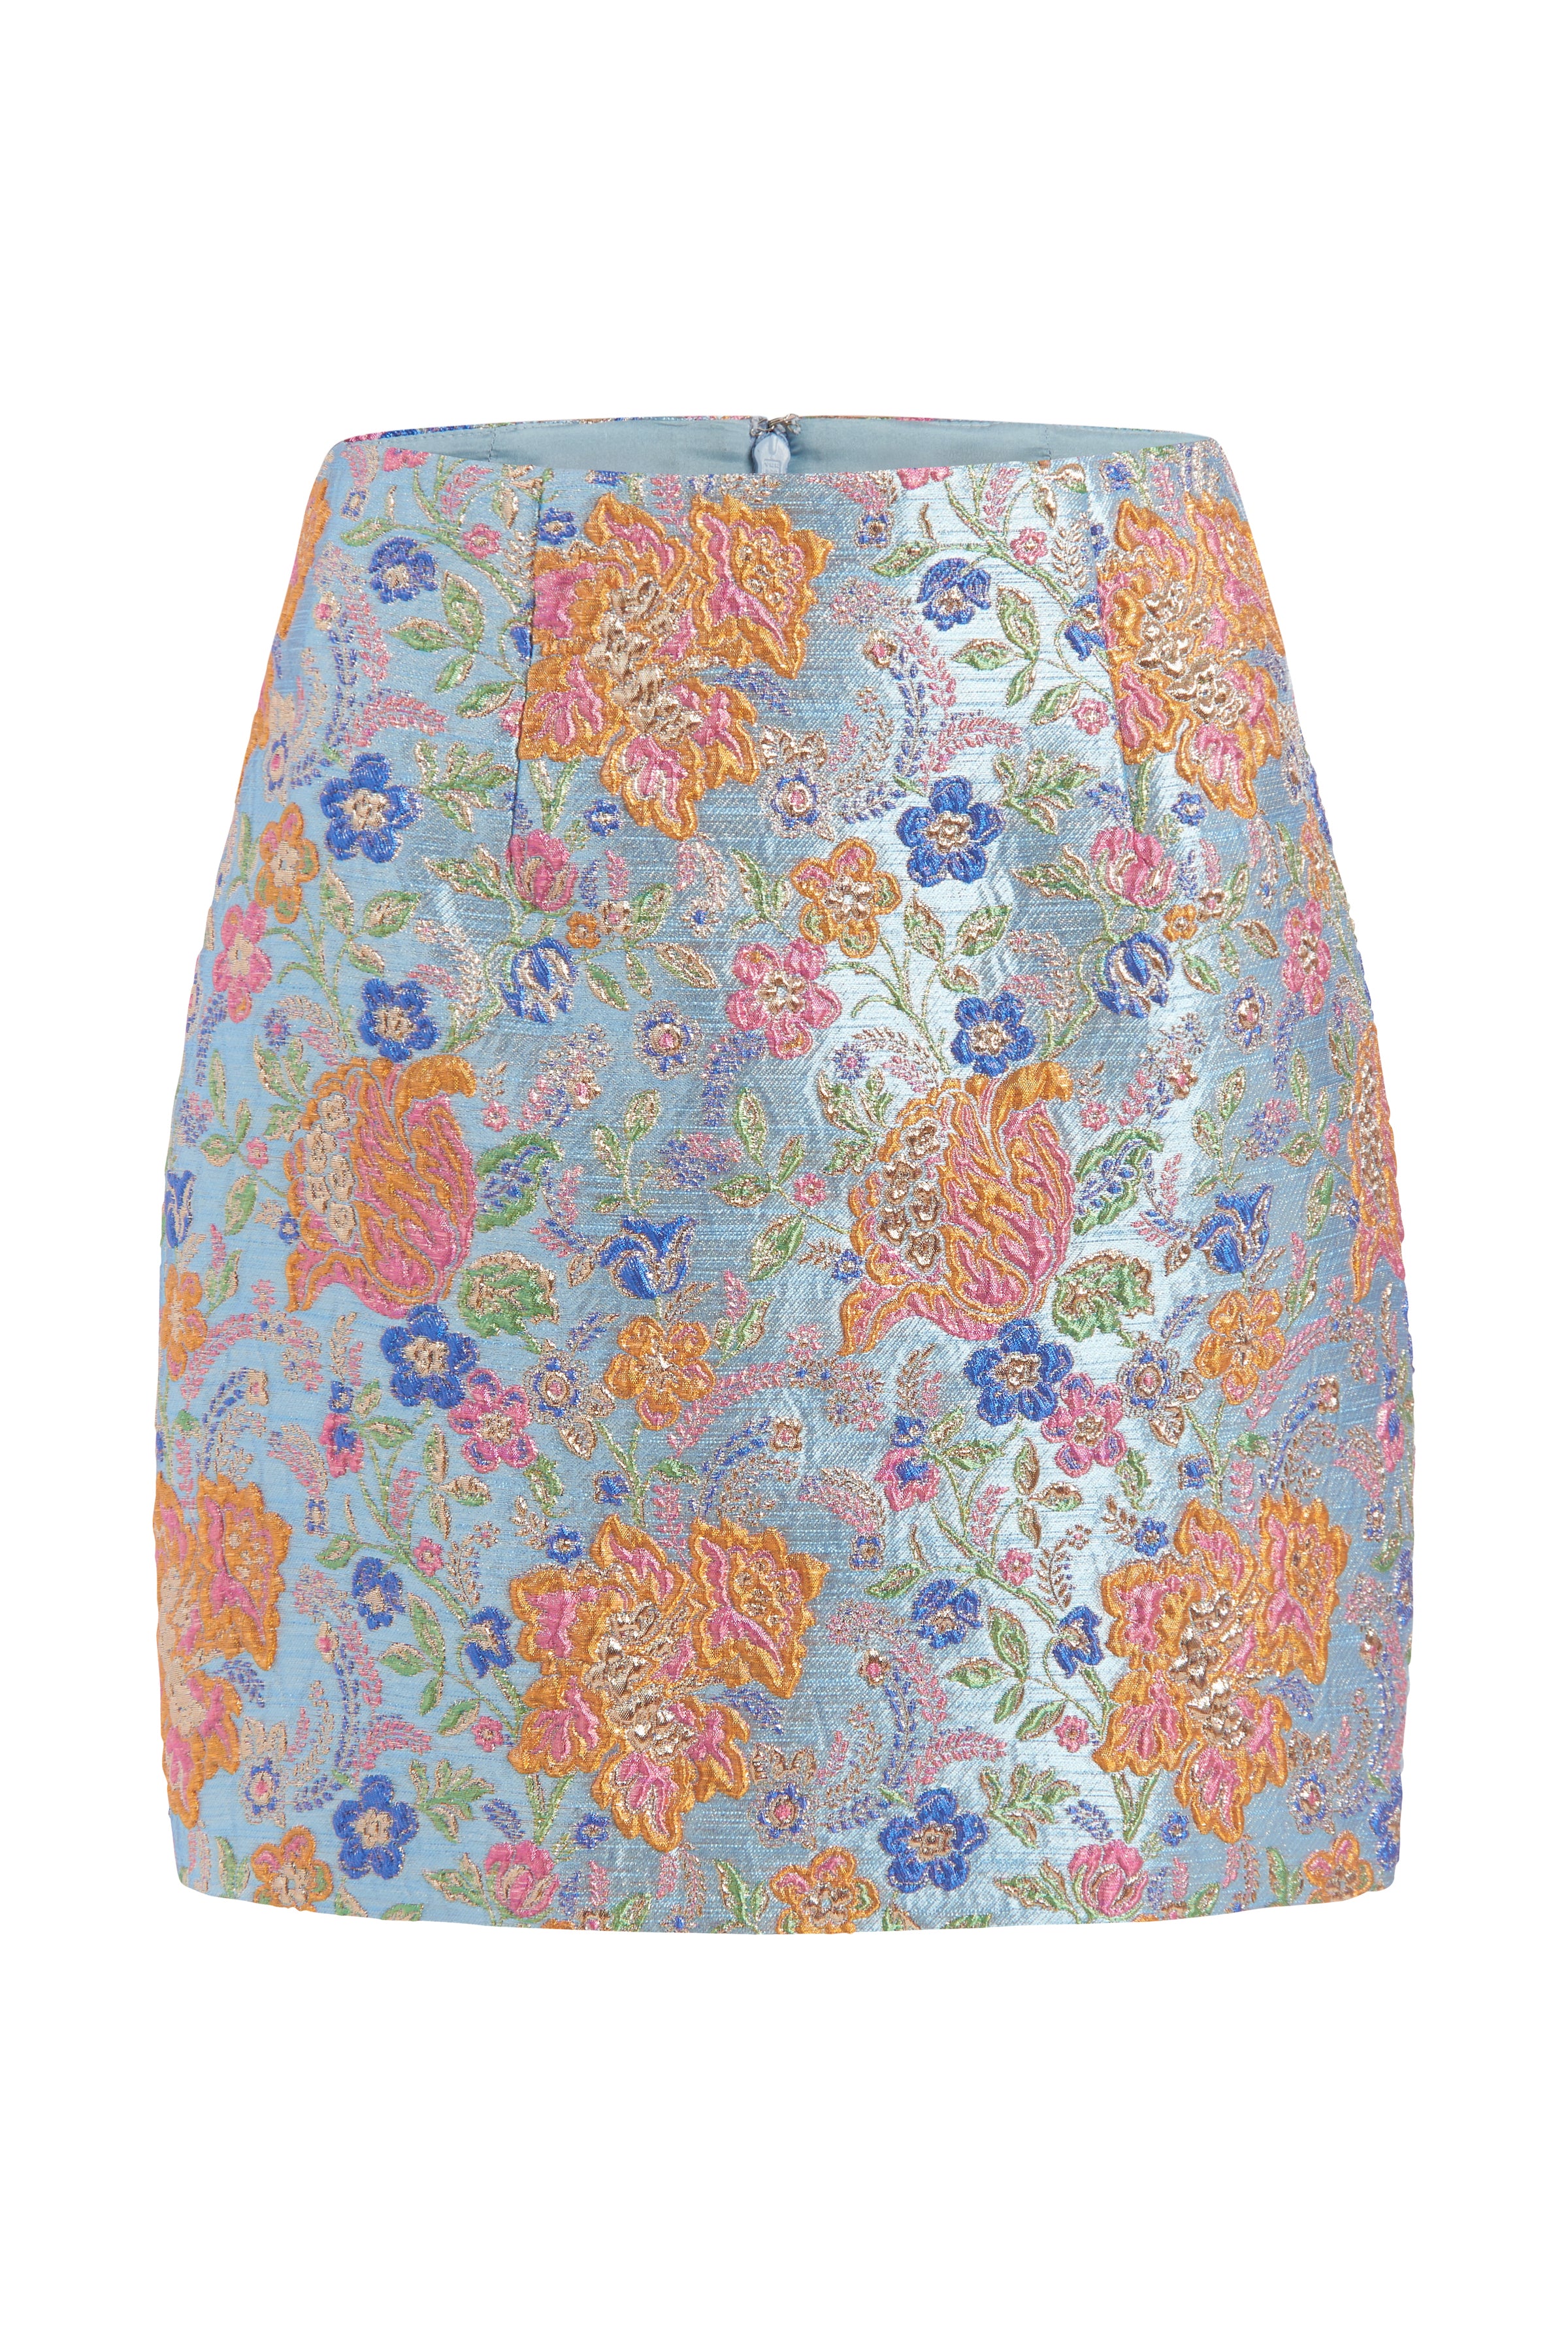 Linette Metallic Floral Brocade Mini Skirt